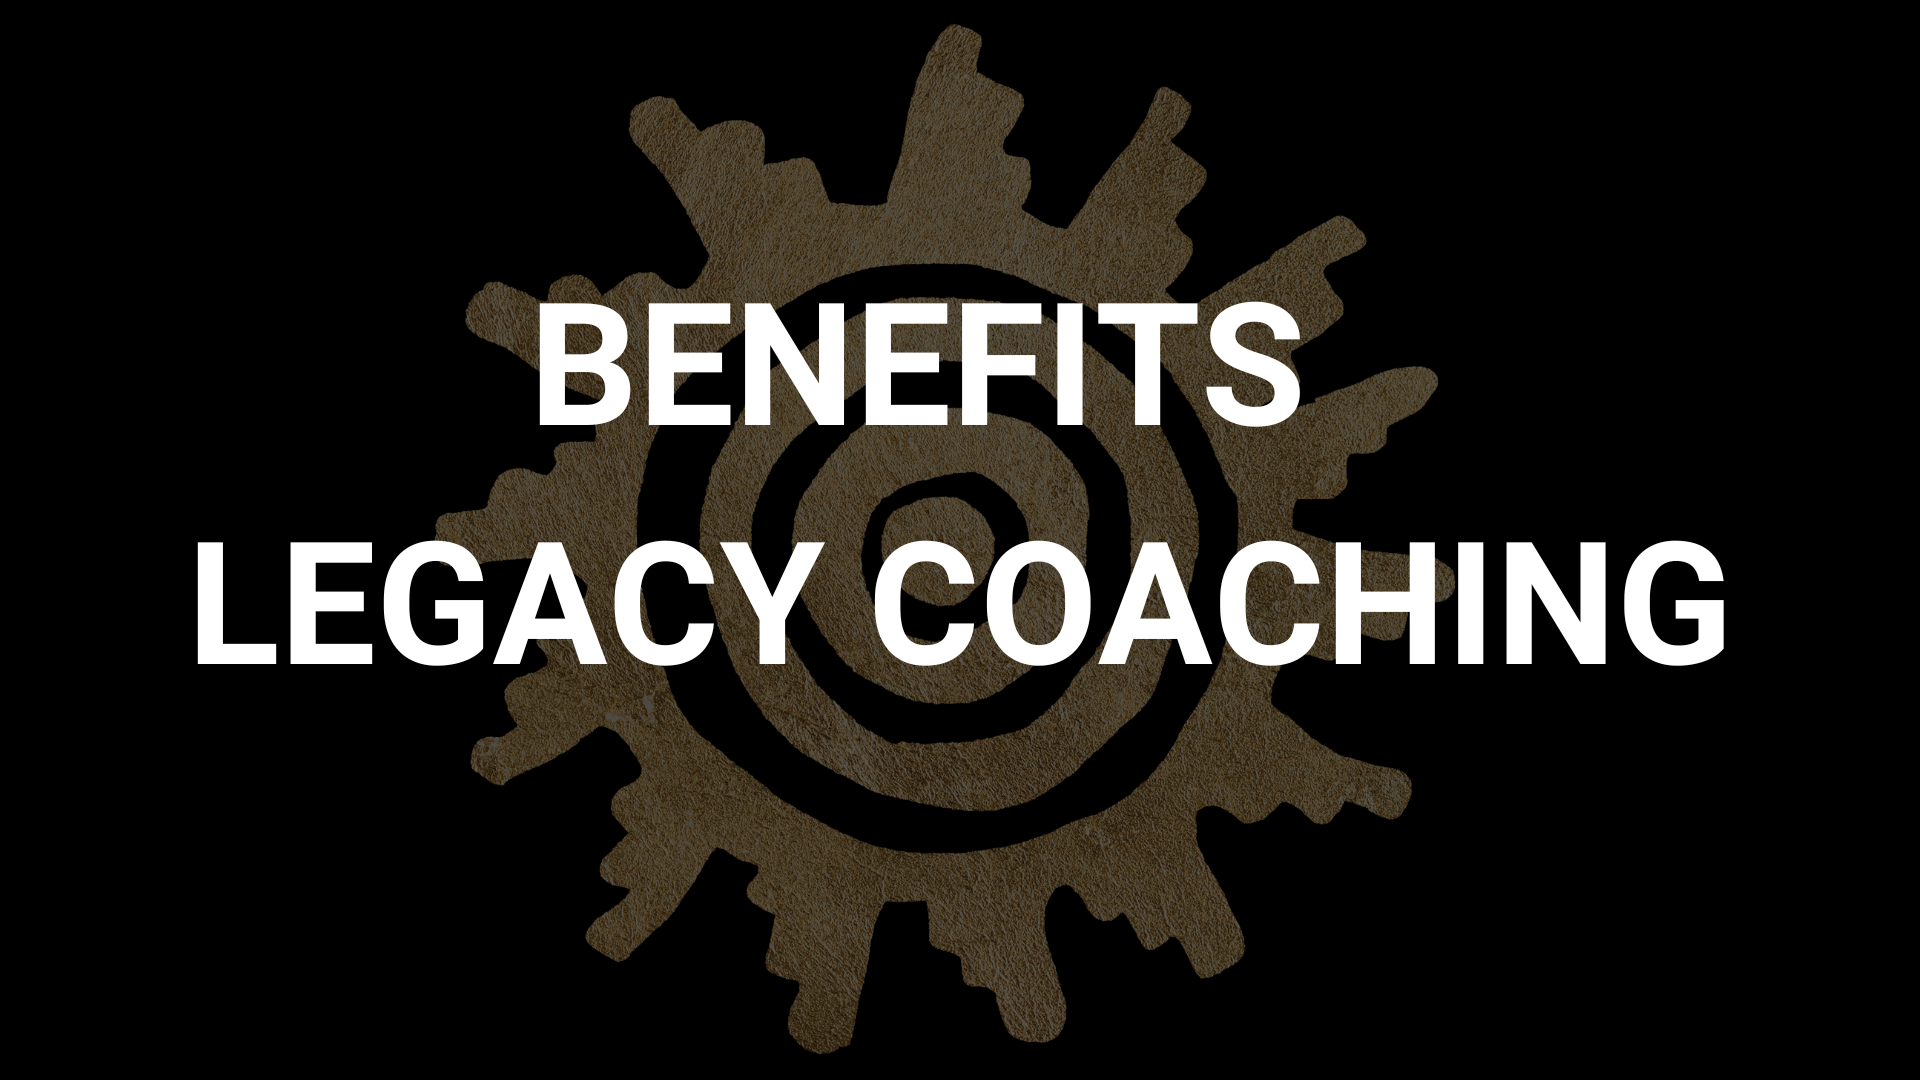 Wendy Kier - benefits<br />
legacy coaching